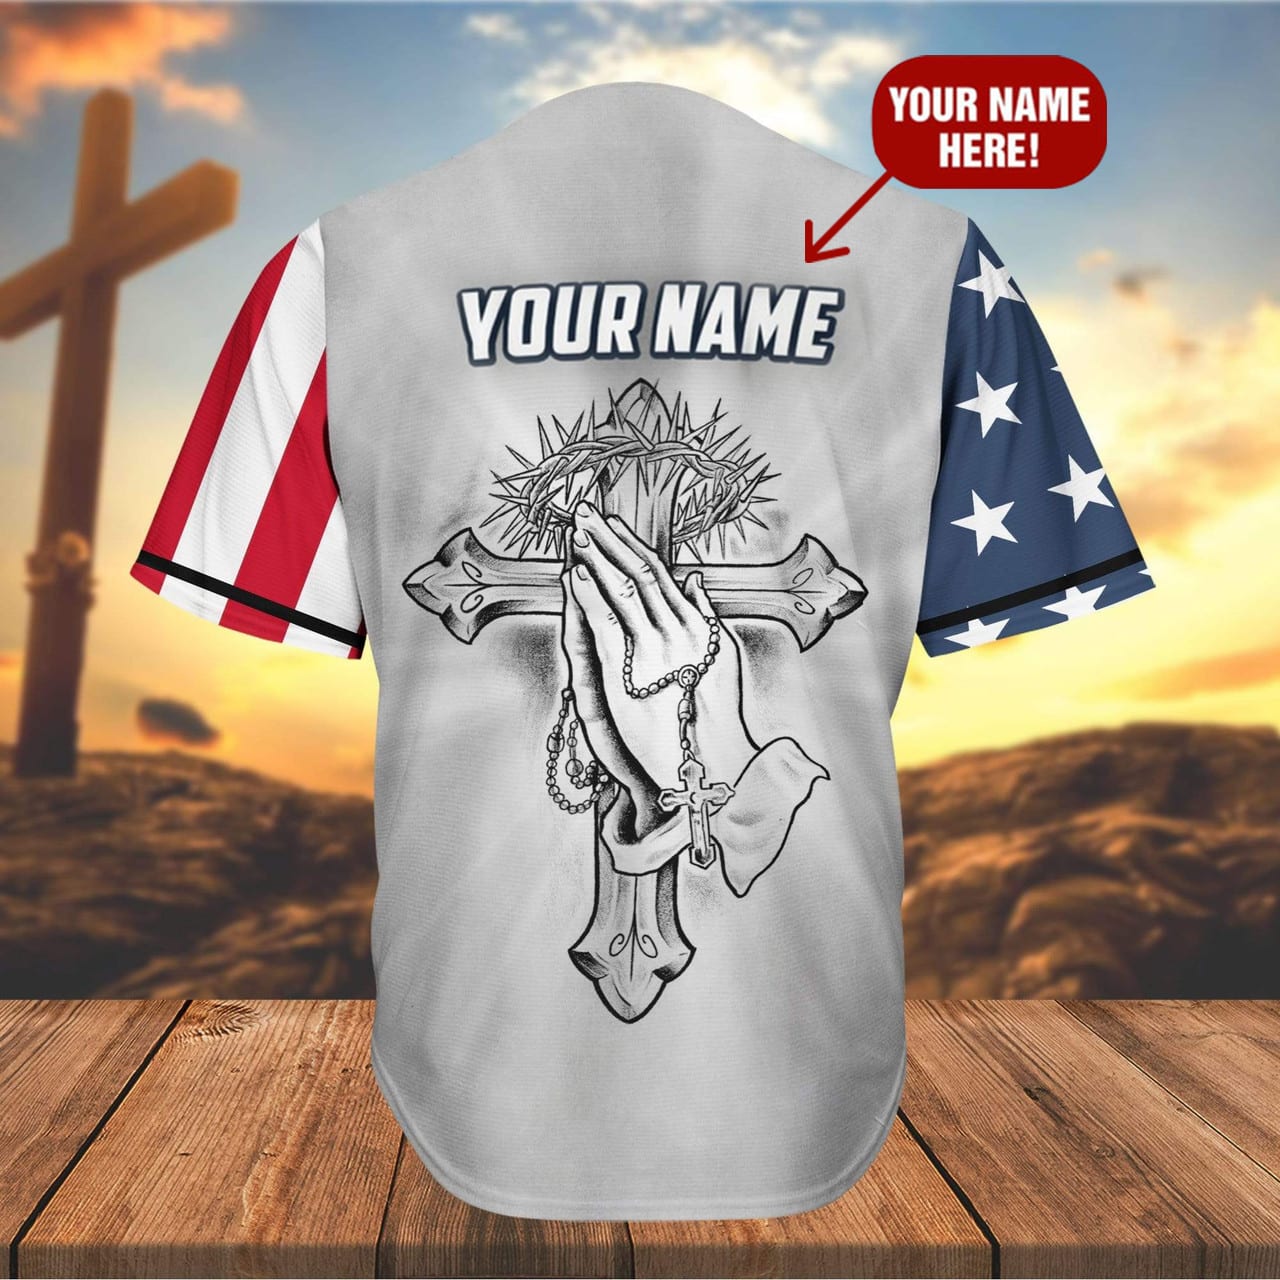 Cross, Christ, Pray Baseball Jersey - The Savior Custom Baseball Jersey Shirt For Men Women